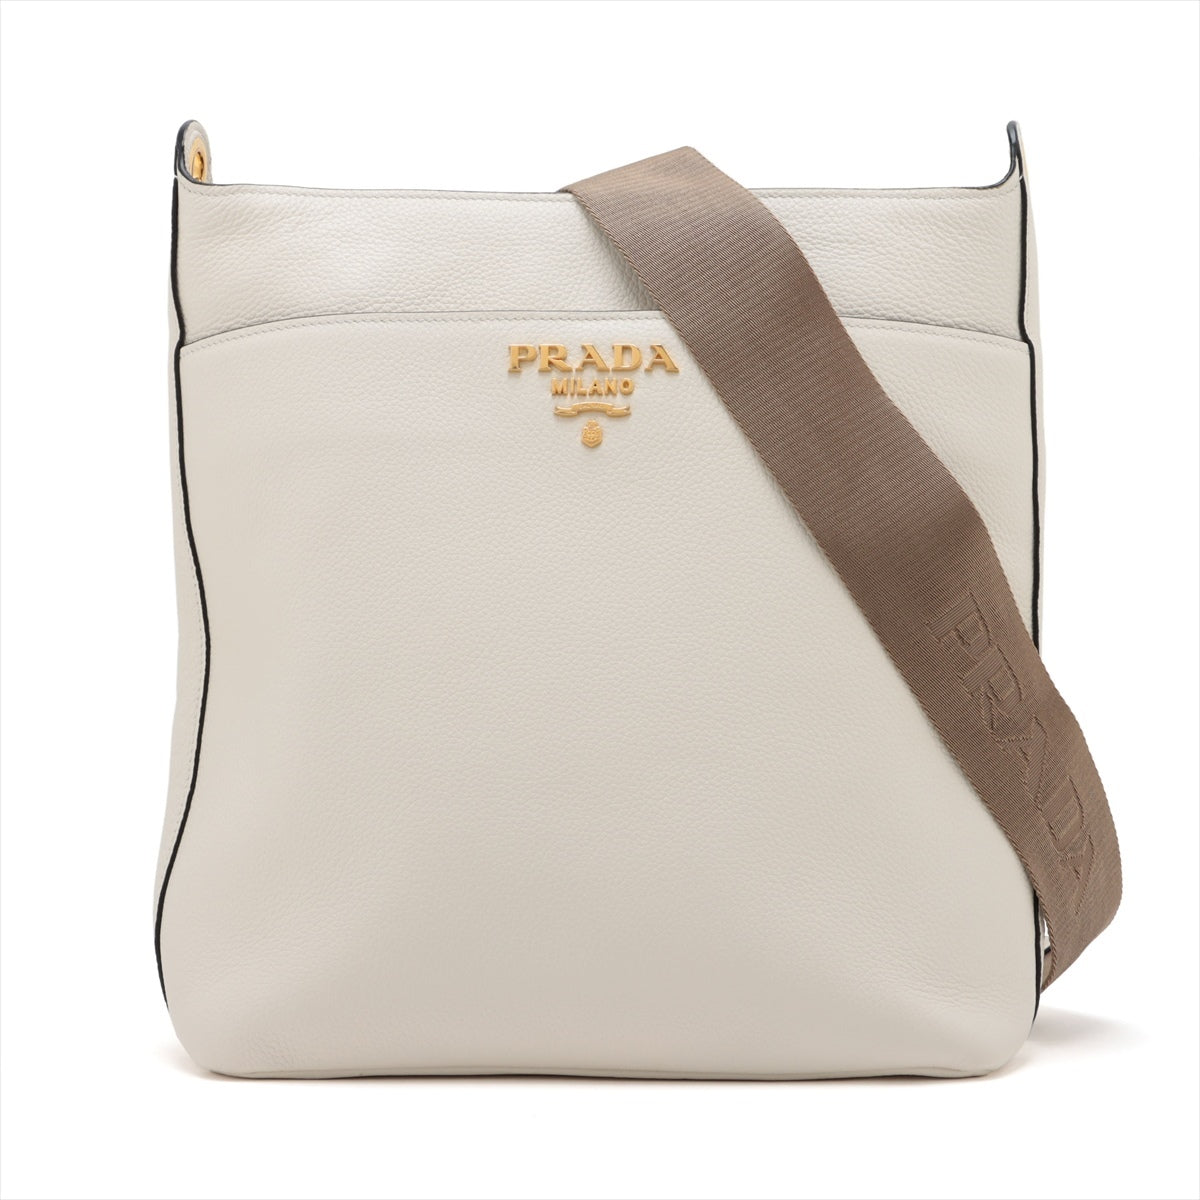 Prada Leather Shoulder Bag White